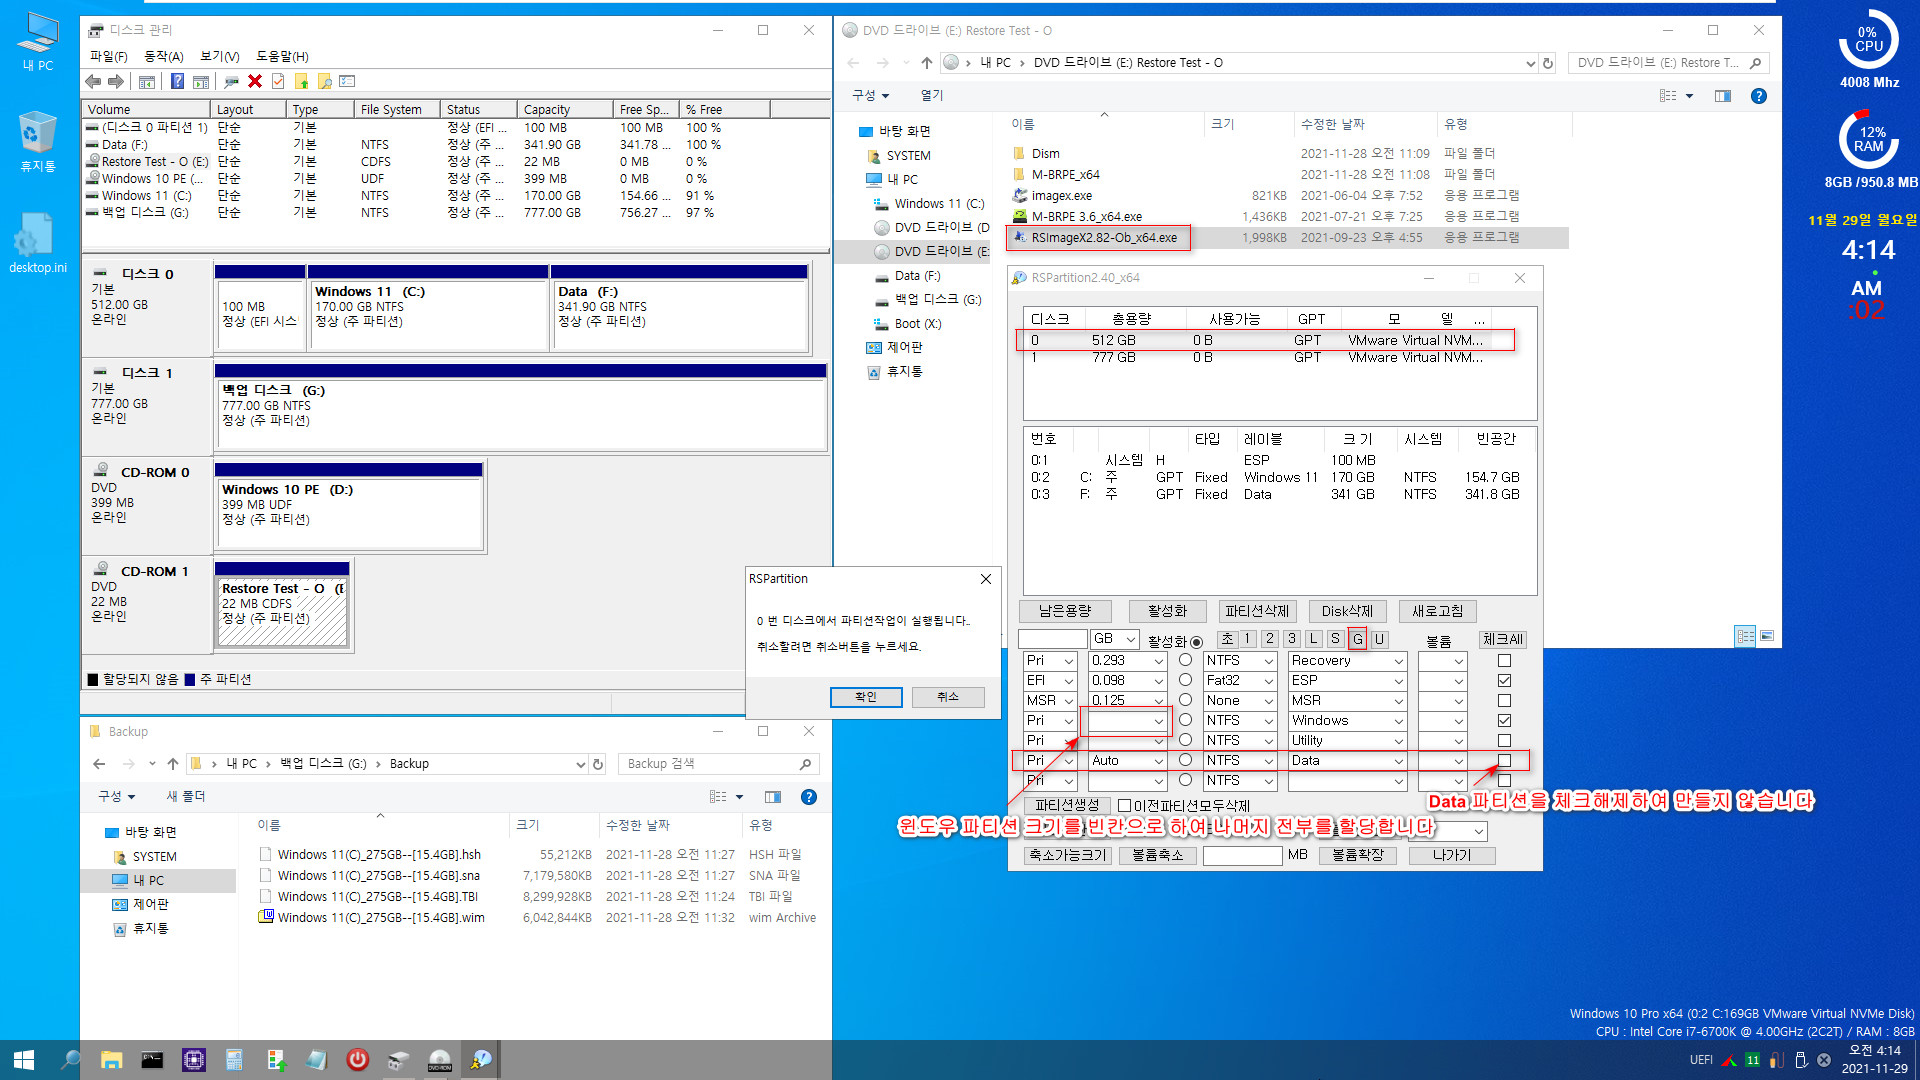 Windows 백업과 복원 테스트 - 백업할 때와 복원할 때 디스크는 같은데 파티션이 달라졌을 때 - wim과 tbi와 sna 3종 테스트 (RSImageX2.82와 M-BRPE 3.6 사용) - 추가 테스트 2021-11-29_041405.jpg